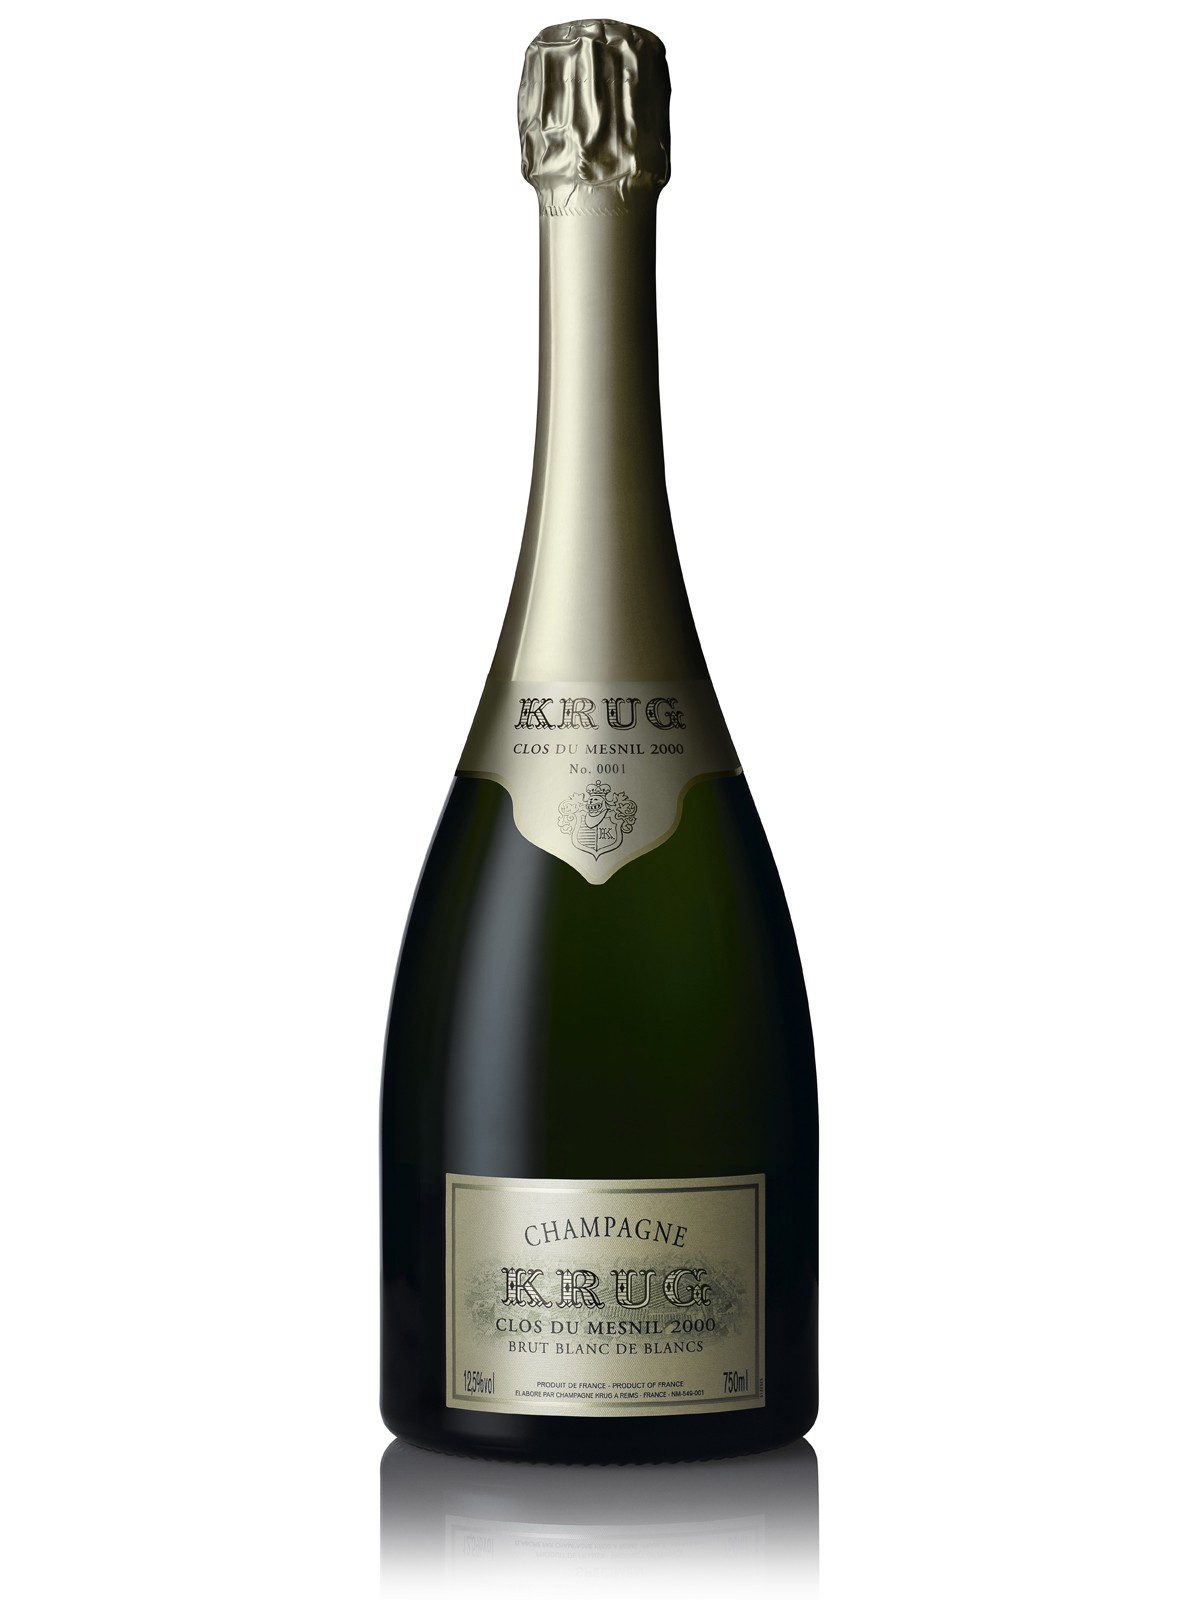 2004 Krug Clos de Mesnil Blanc de Blanc Brut Champagne Magnum - click image for full description